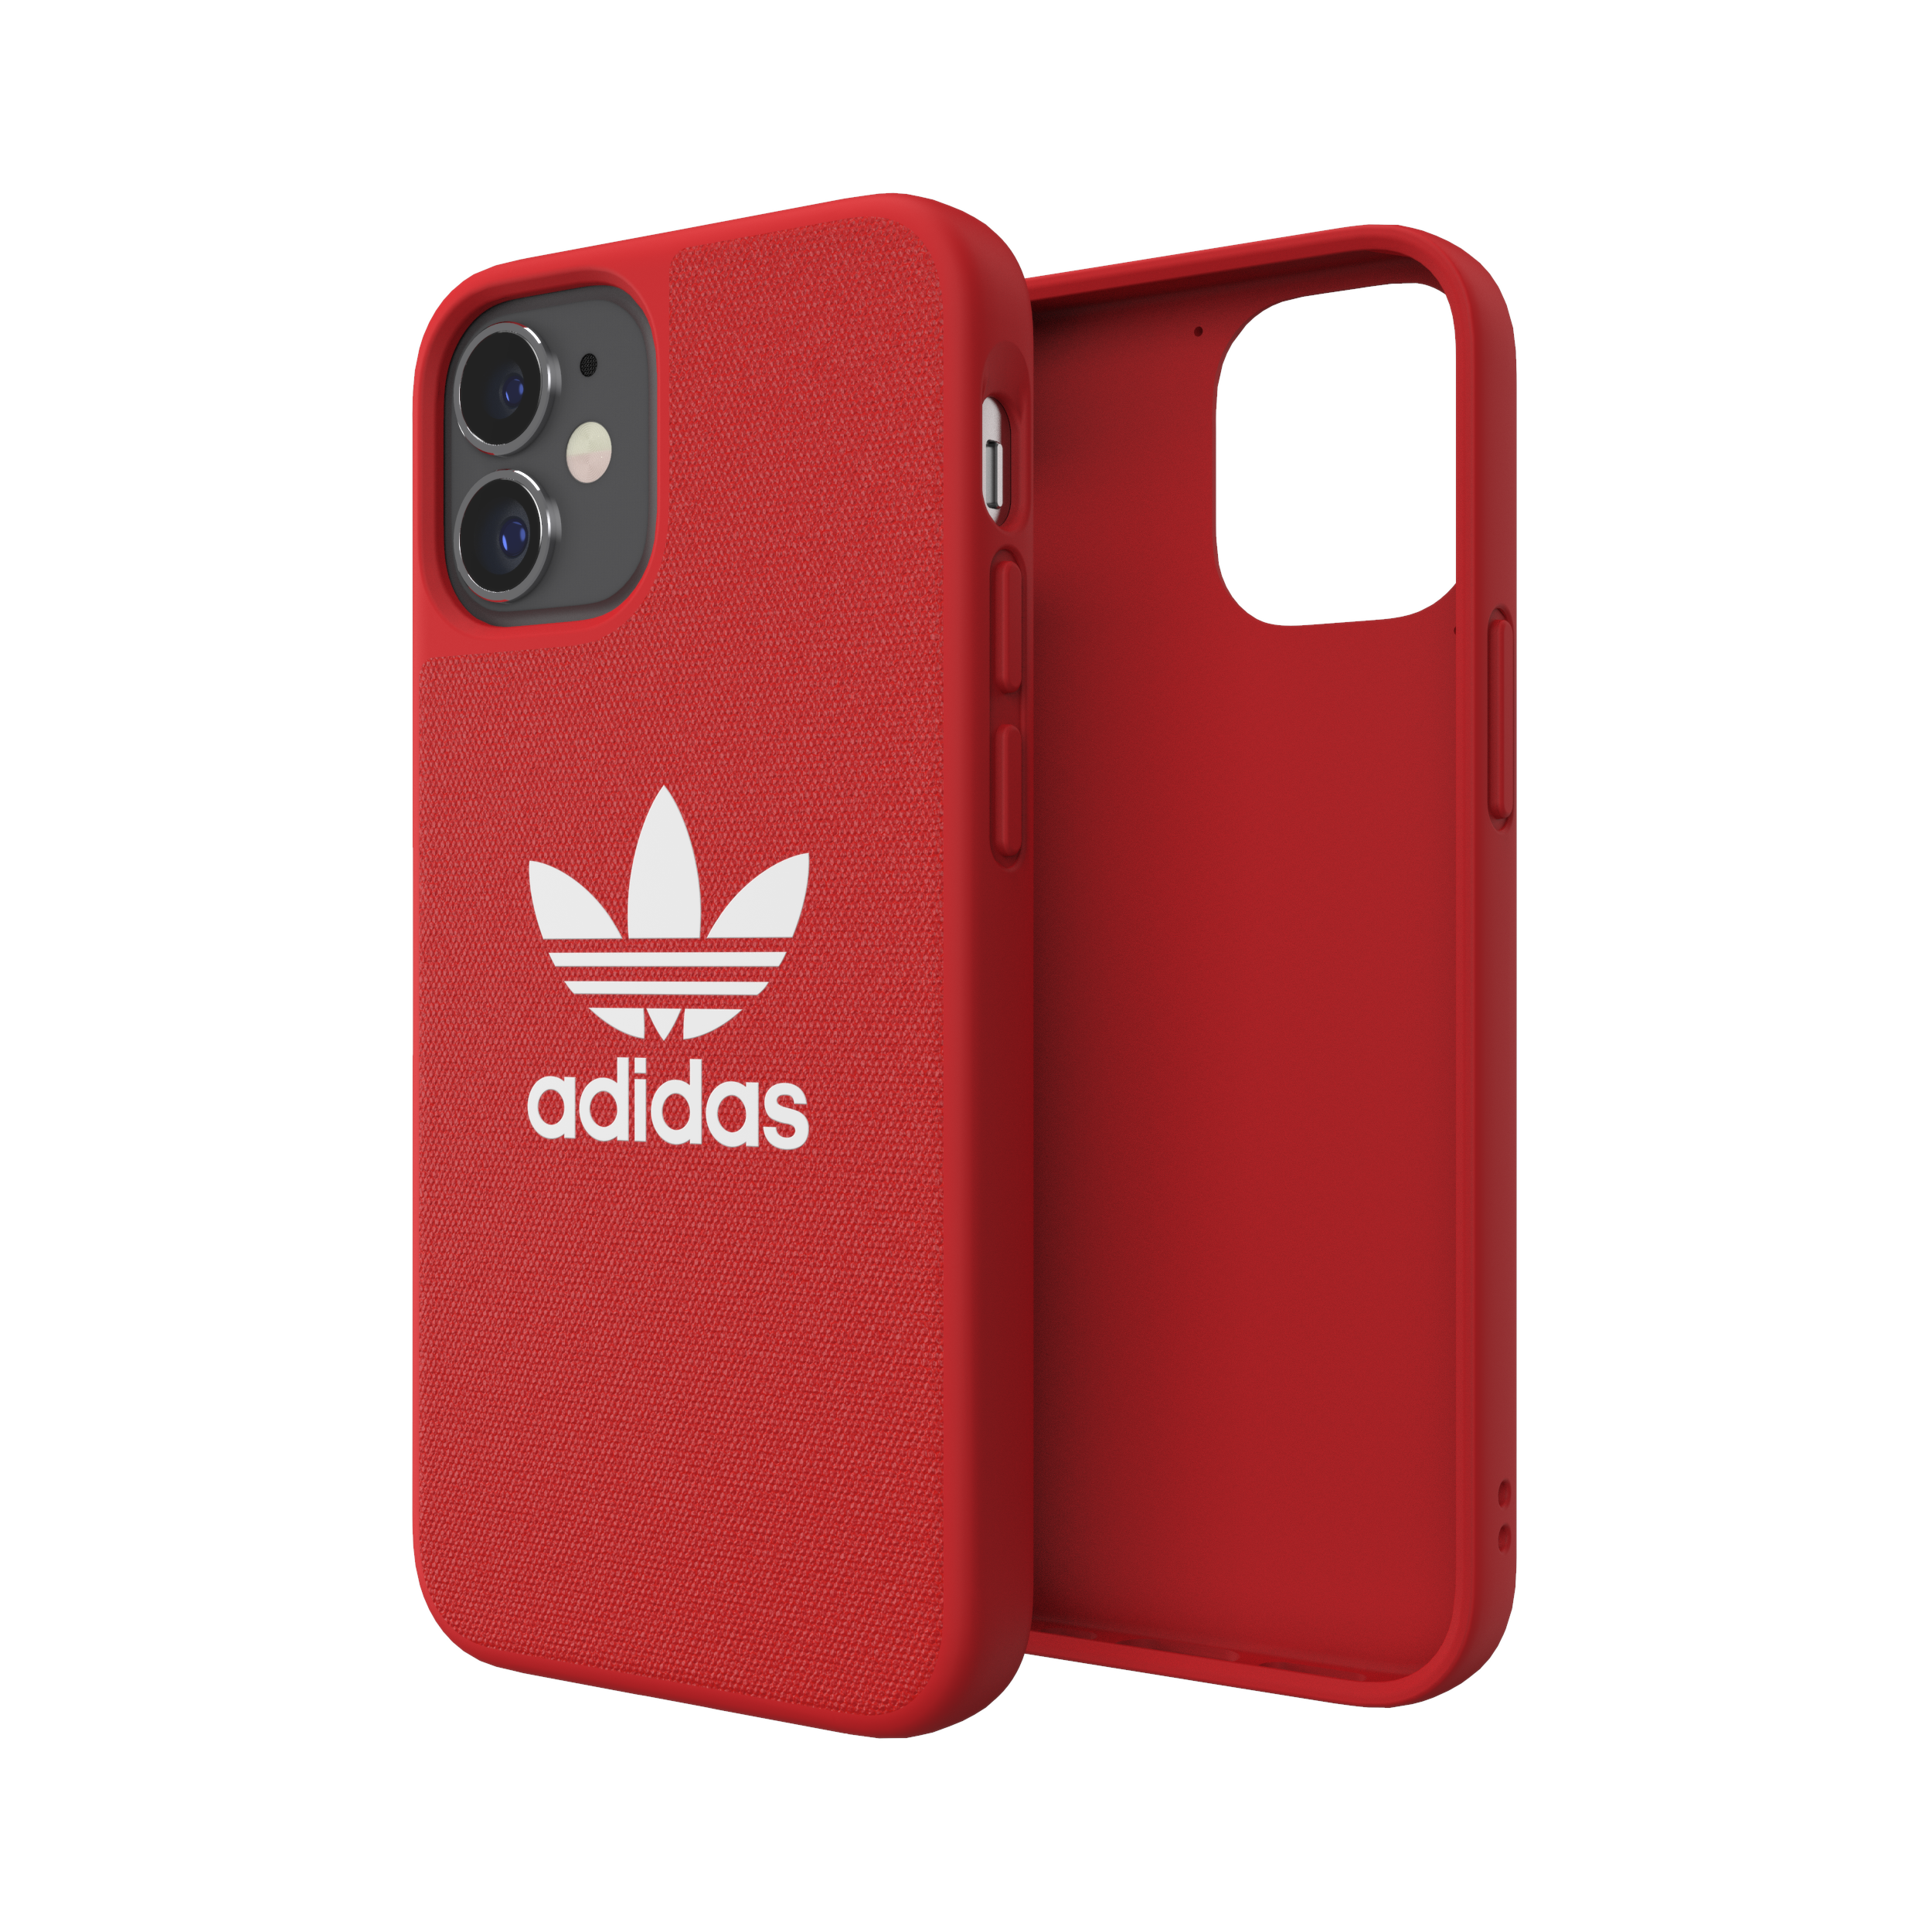 Adidas ORIGINALS Apple iPhone 12 Mini Canvas Case - Back cover w/ Trefoil Design, Scratch & Drop Protection w/ TPU Bumper, Wireless Charging Compatible - Scarlet